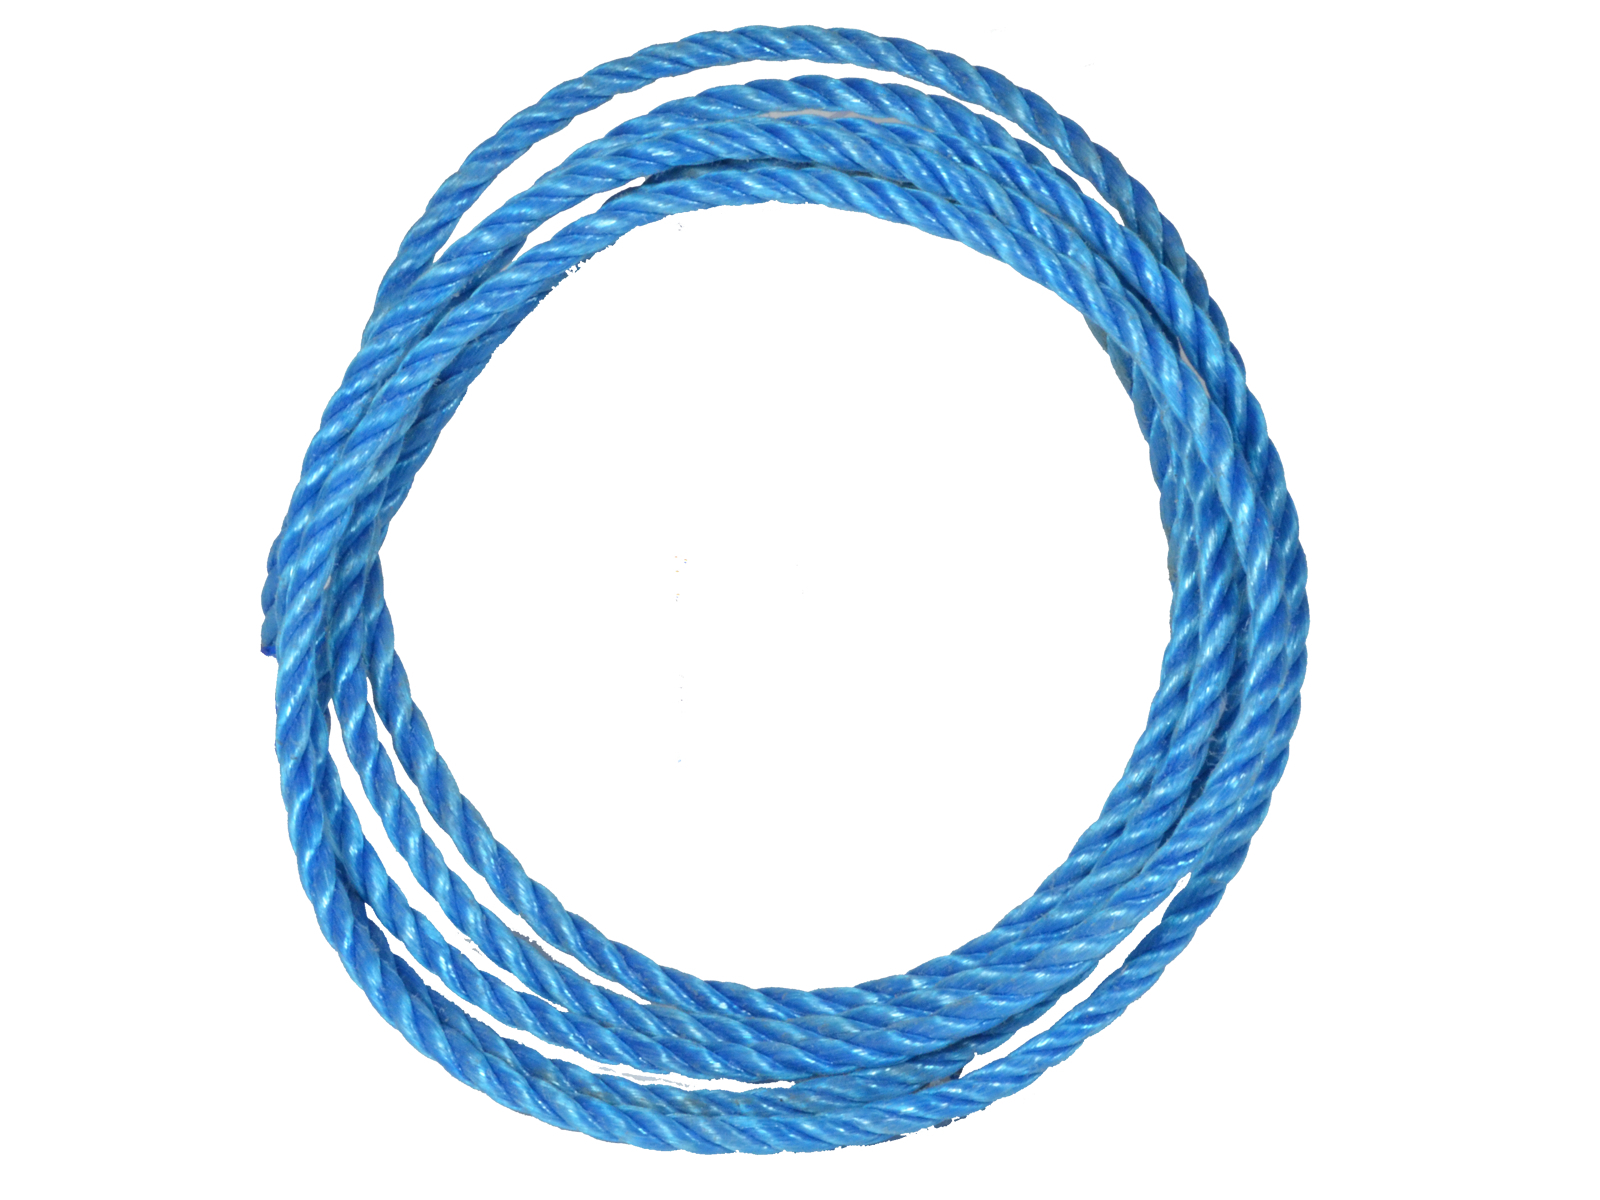 Seil blau lfm. Durchmesser 8 mm